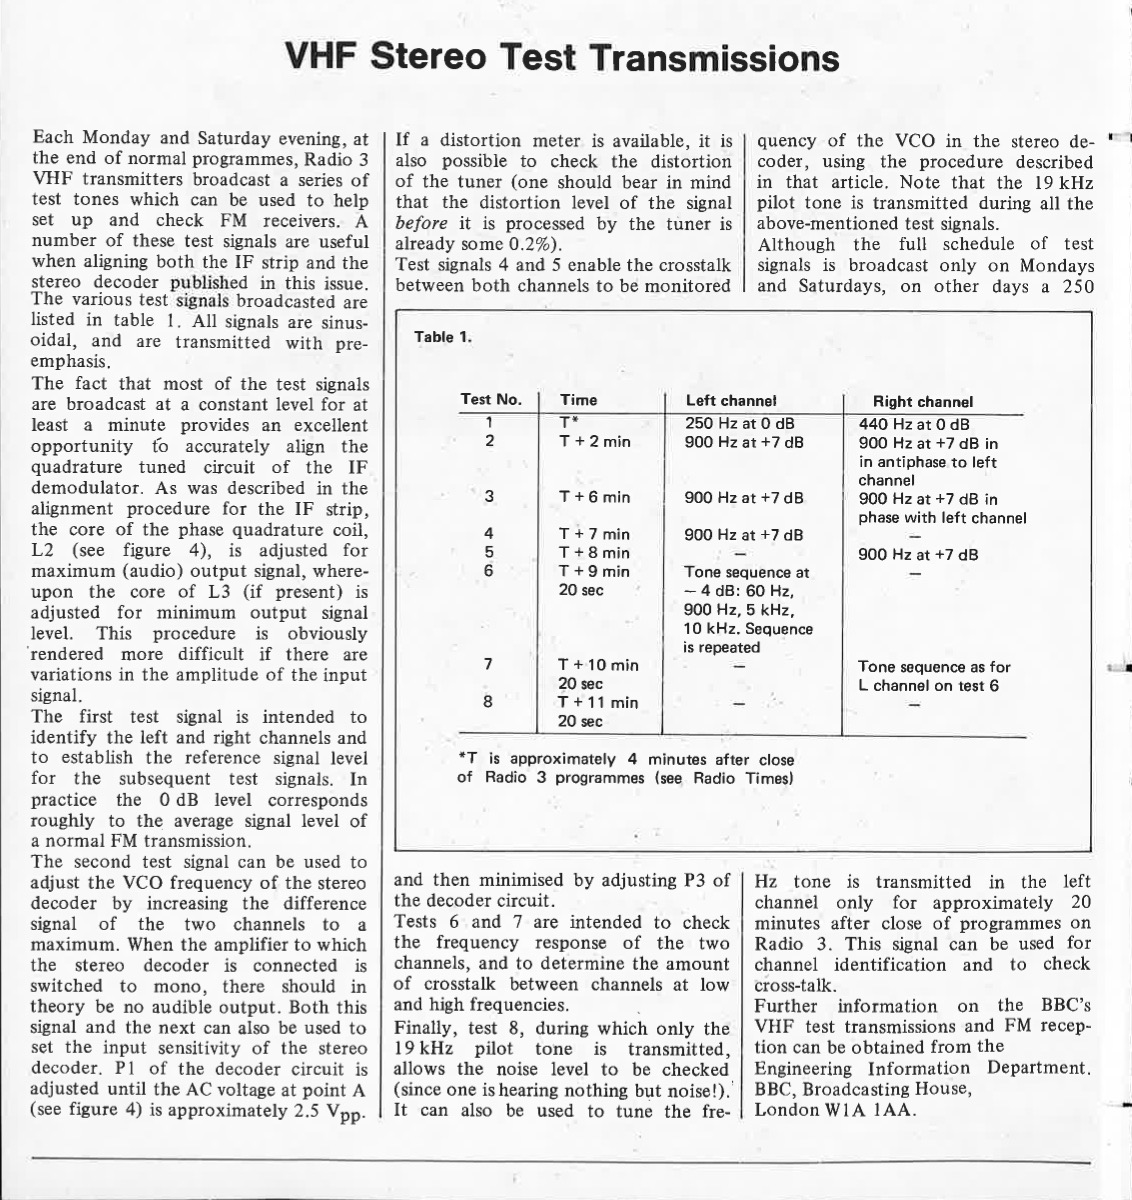 VHF stereo test transmissions